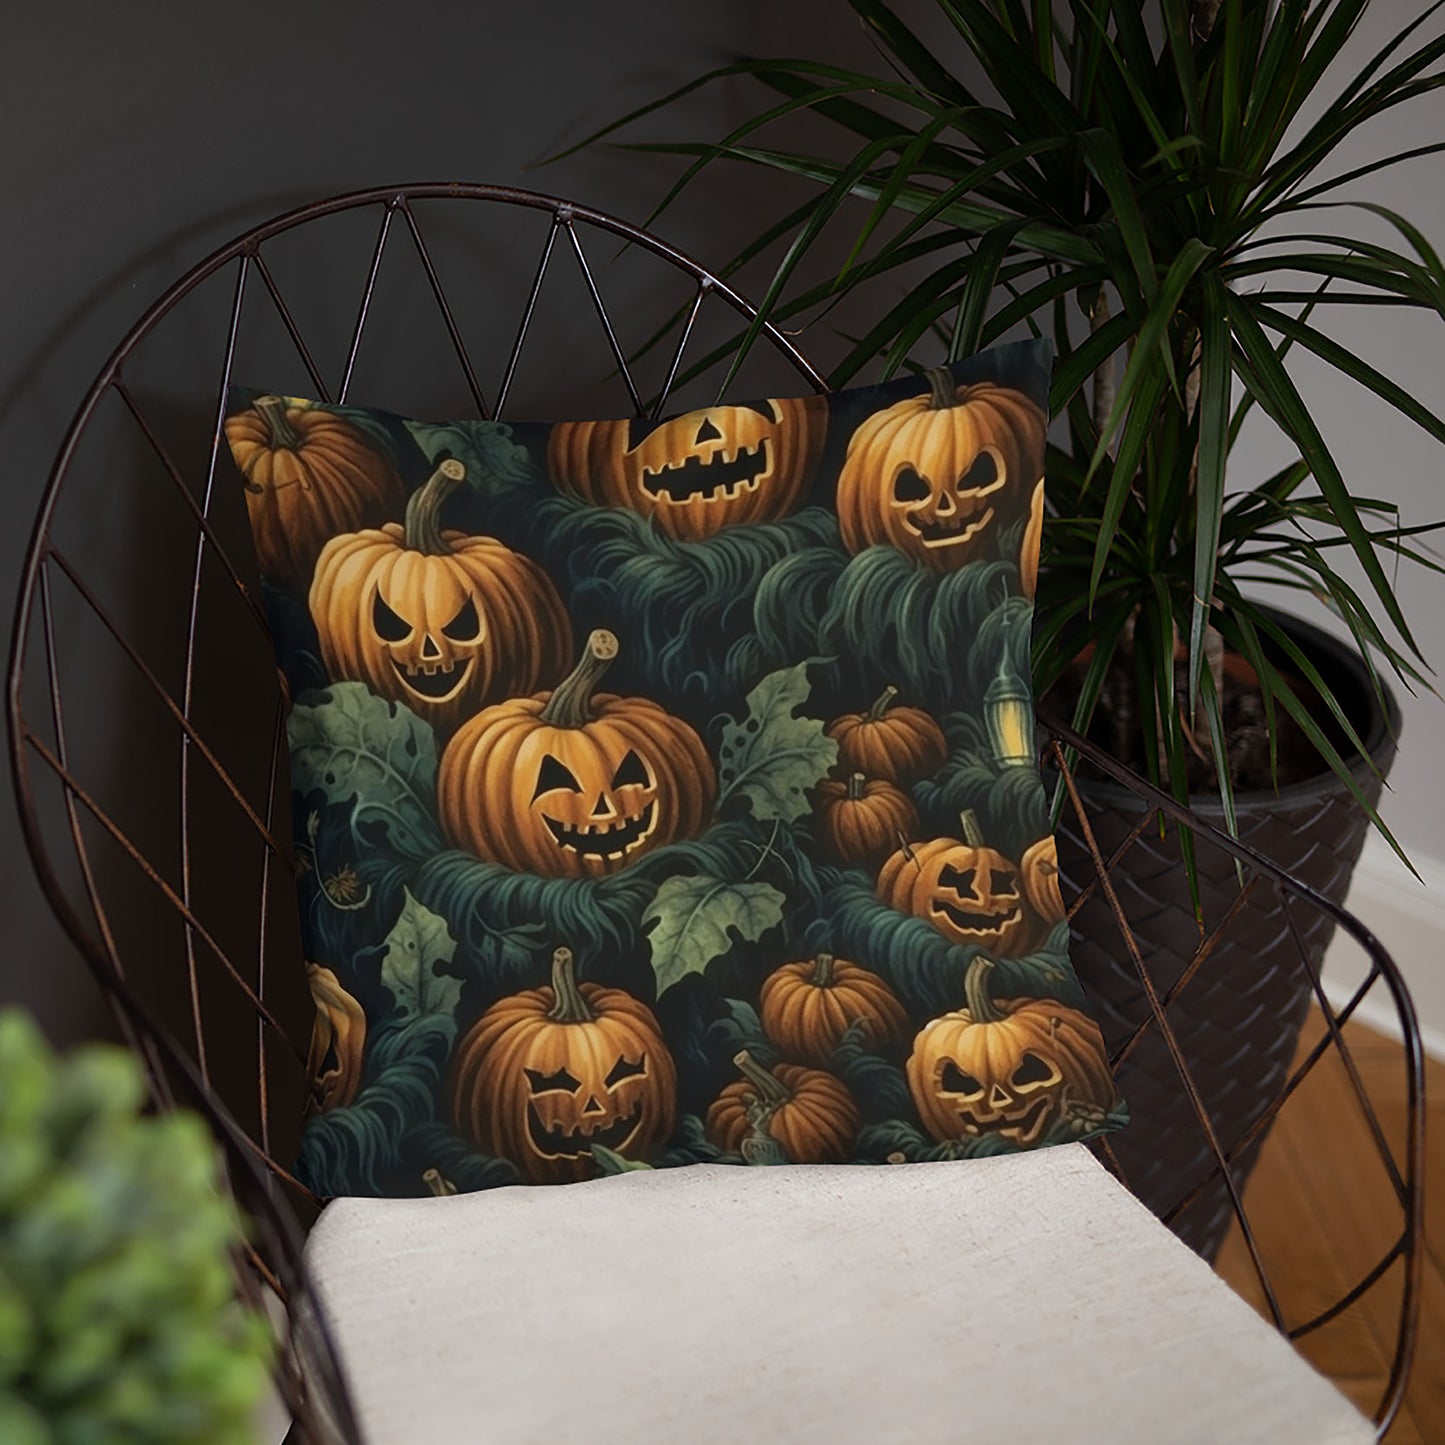 Halloween Throw Pillow Enchanted Twilight Pumpkin Foliage Polyester Decorative Cushion 18x18